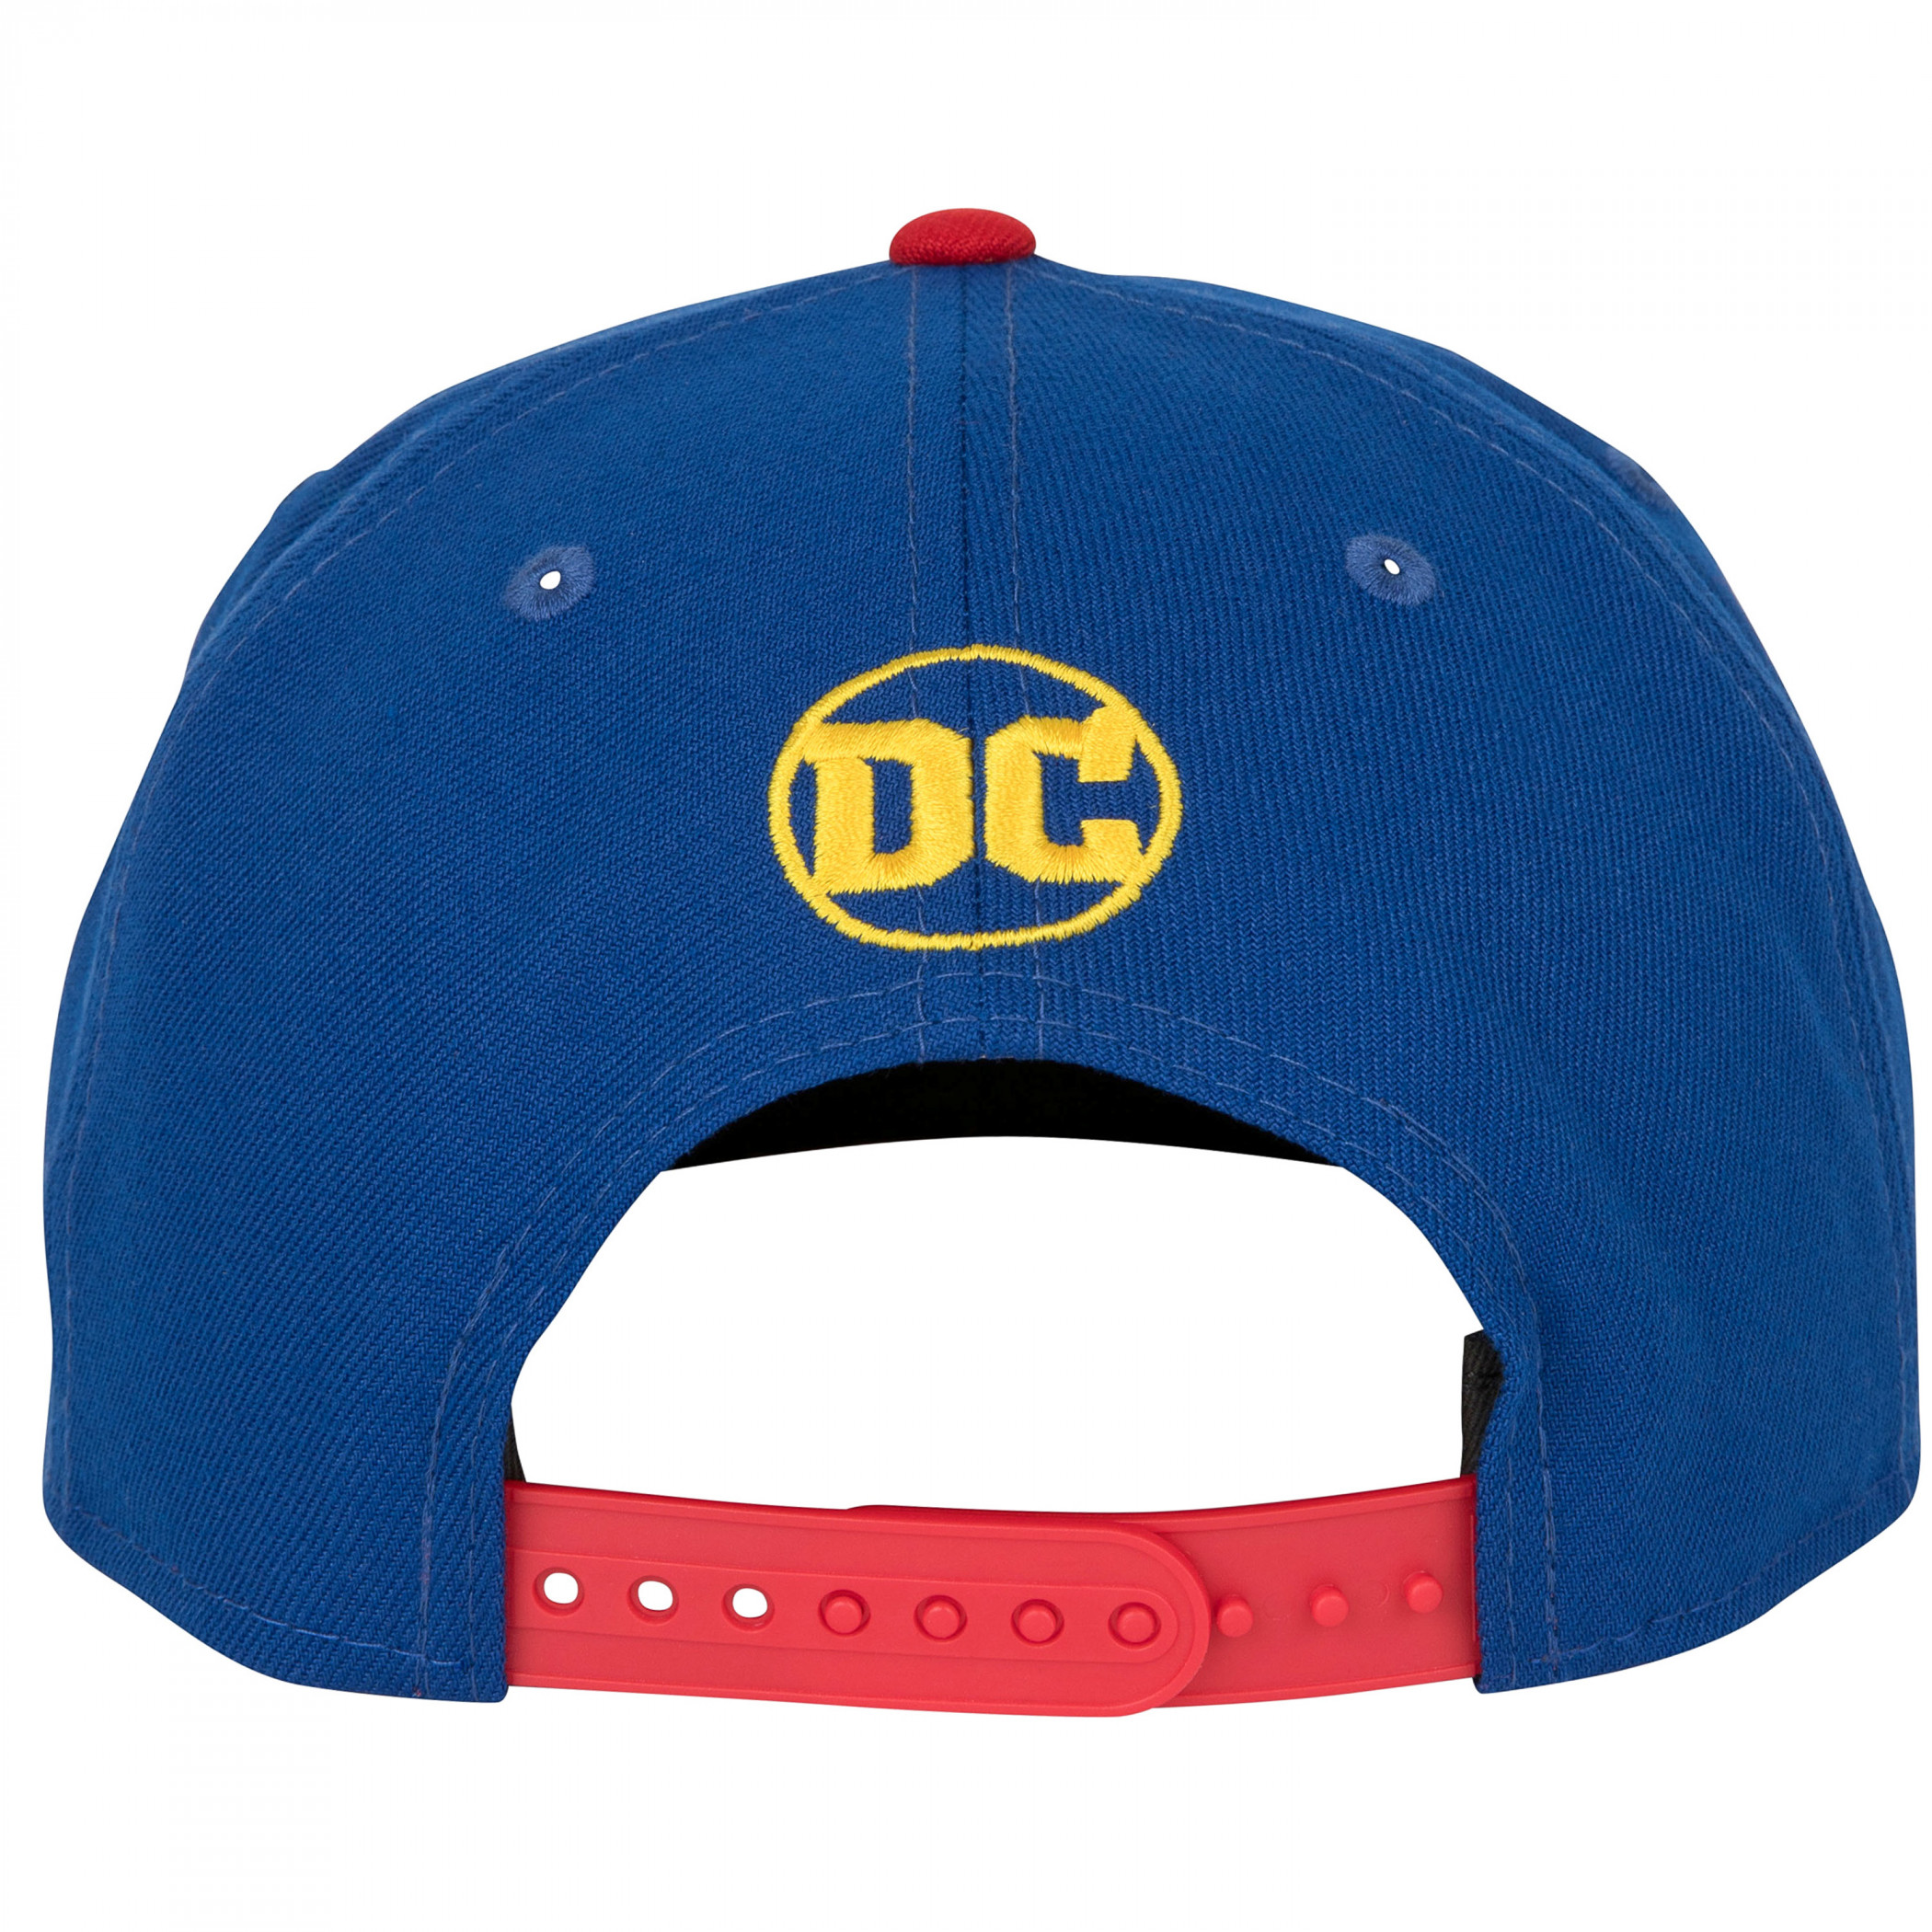 Superman Classic Logo New Era 9Fifty Adjustable Hat